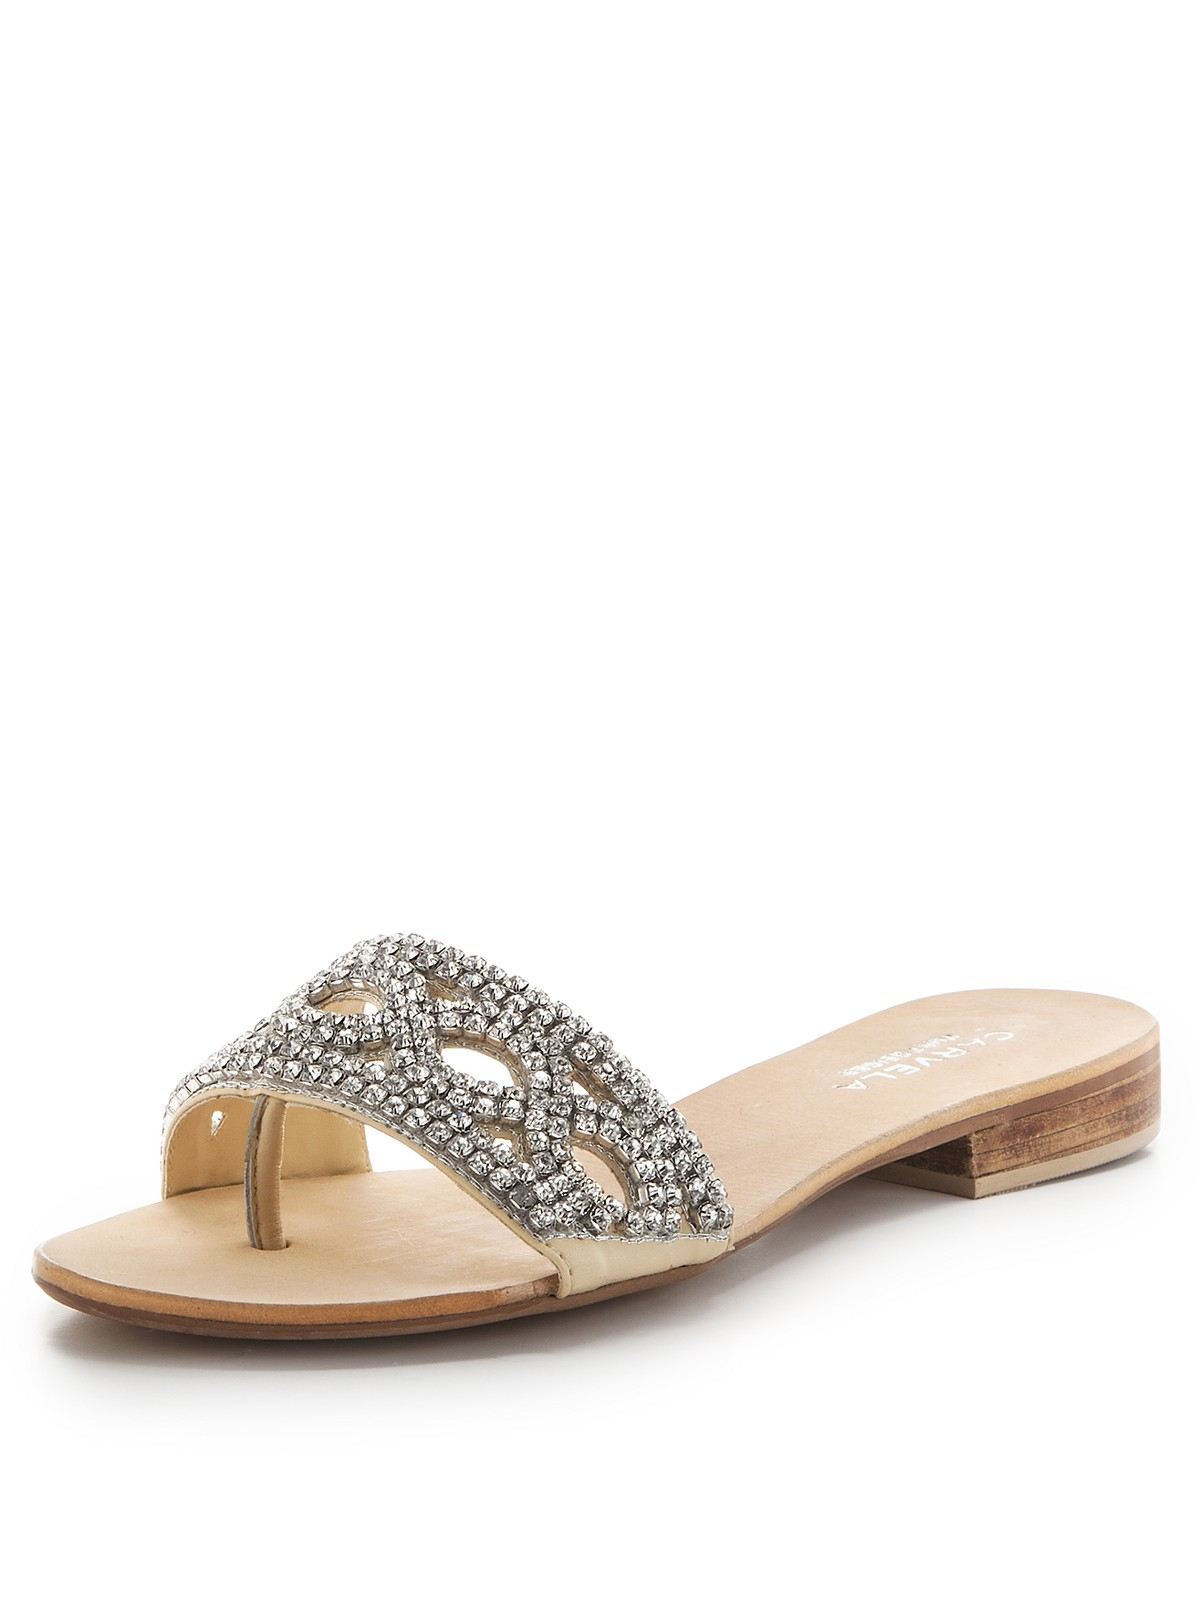 Carvela Kurt Geiger Bethan Jewelled Flat Sandals in Silver | Lyst